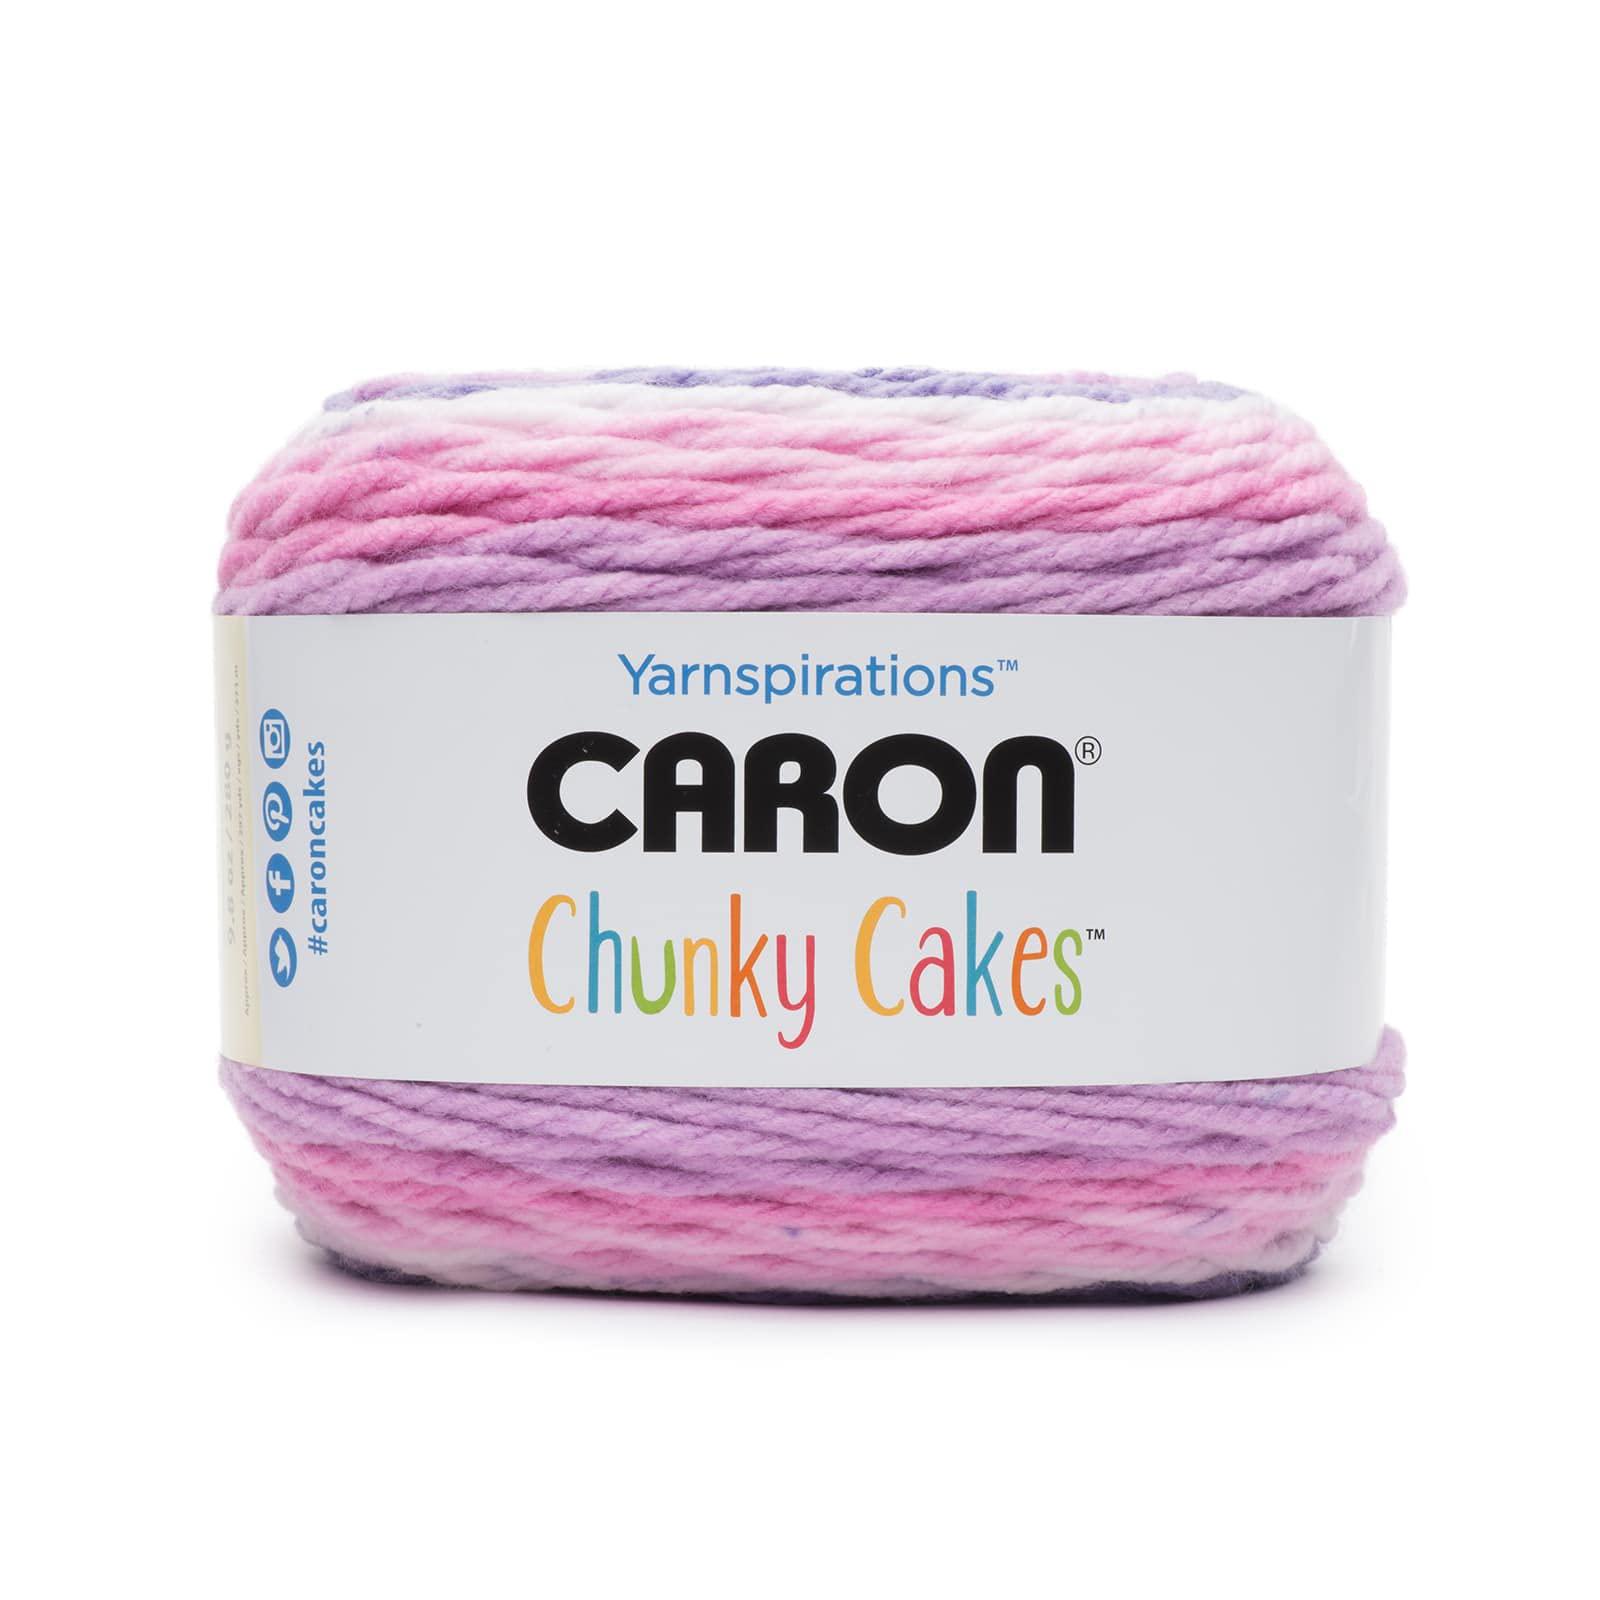 Caron 12 pack: caron chunky cakes yarn